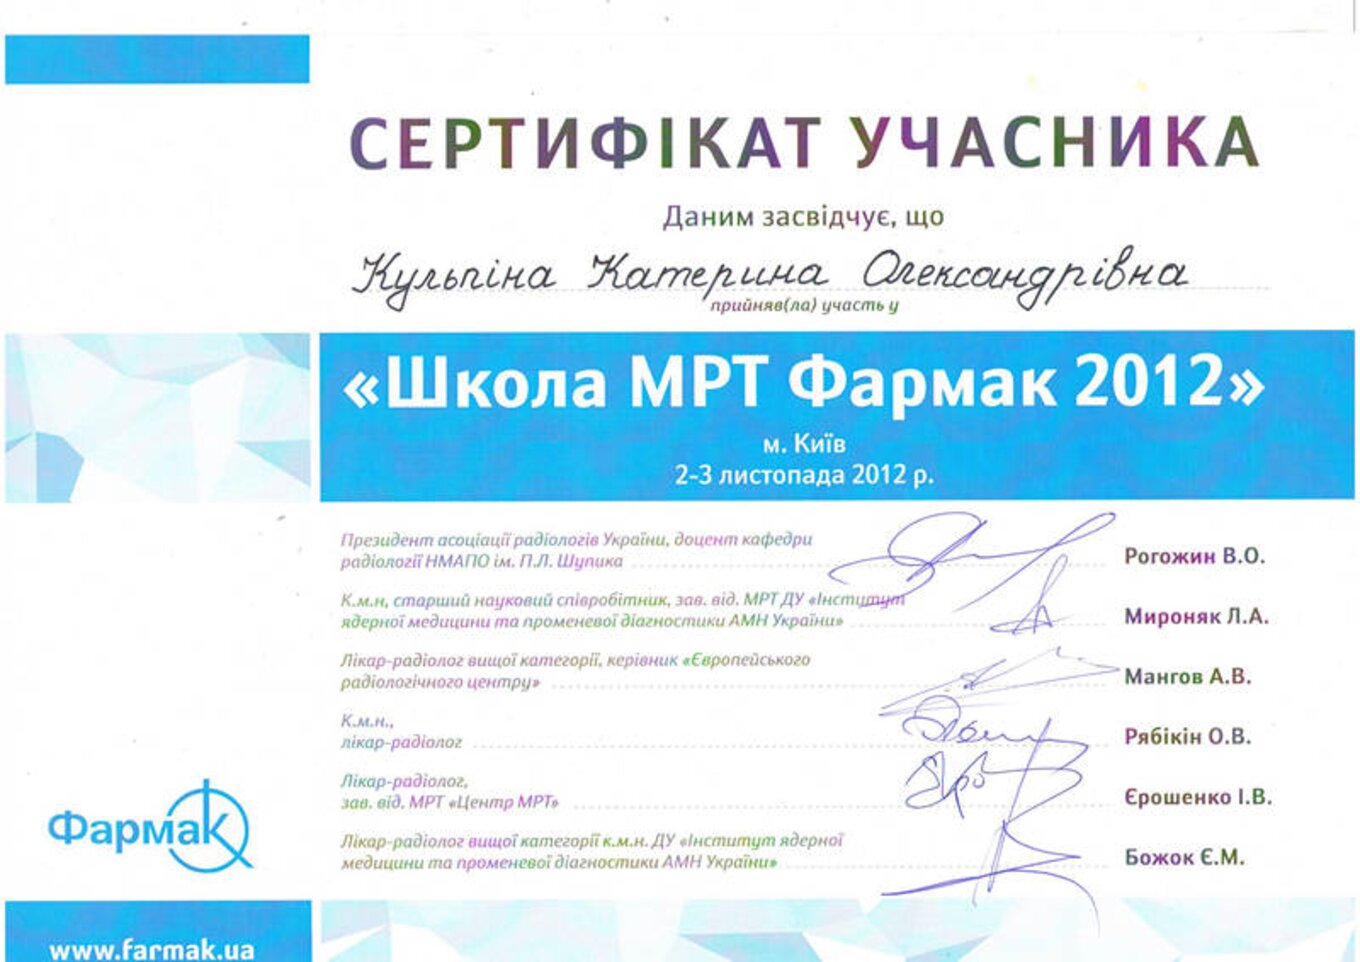 certificates/kulpina-katerina-oleksandrivna/hemomedika-cert-kulpina-2012-_kiev-shkola_mrt_farmak.jpg